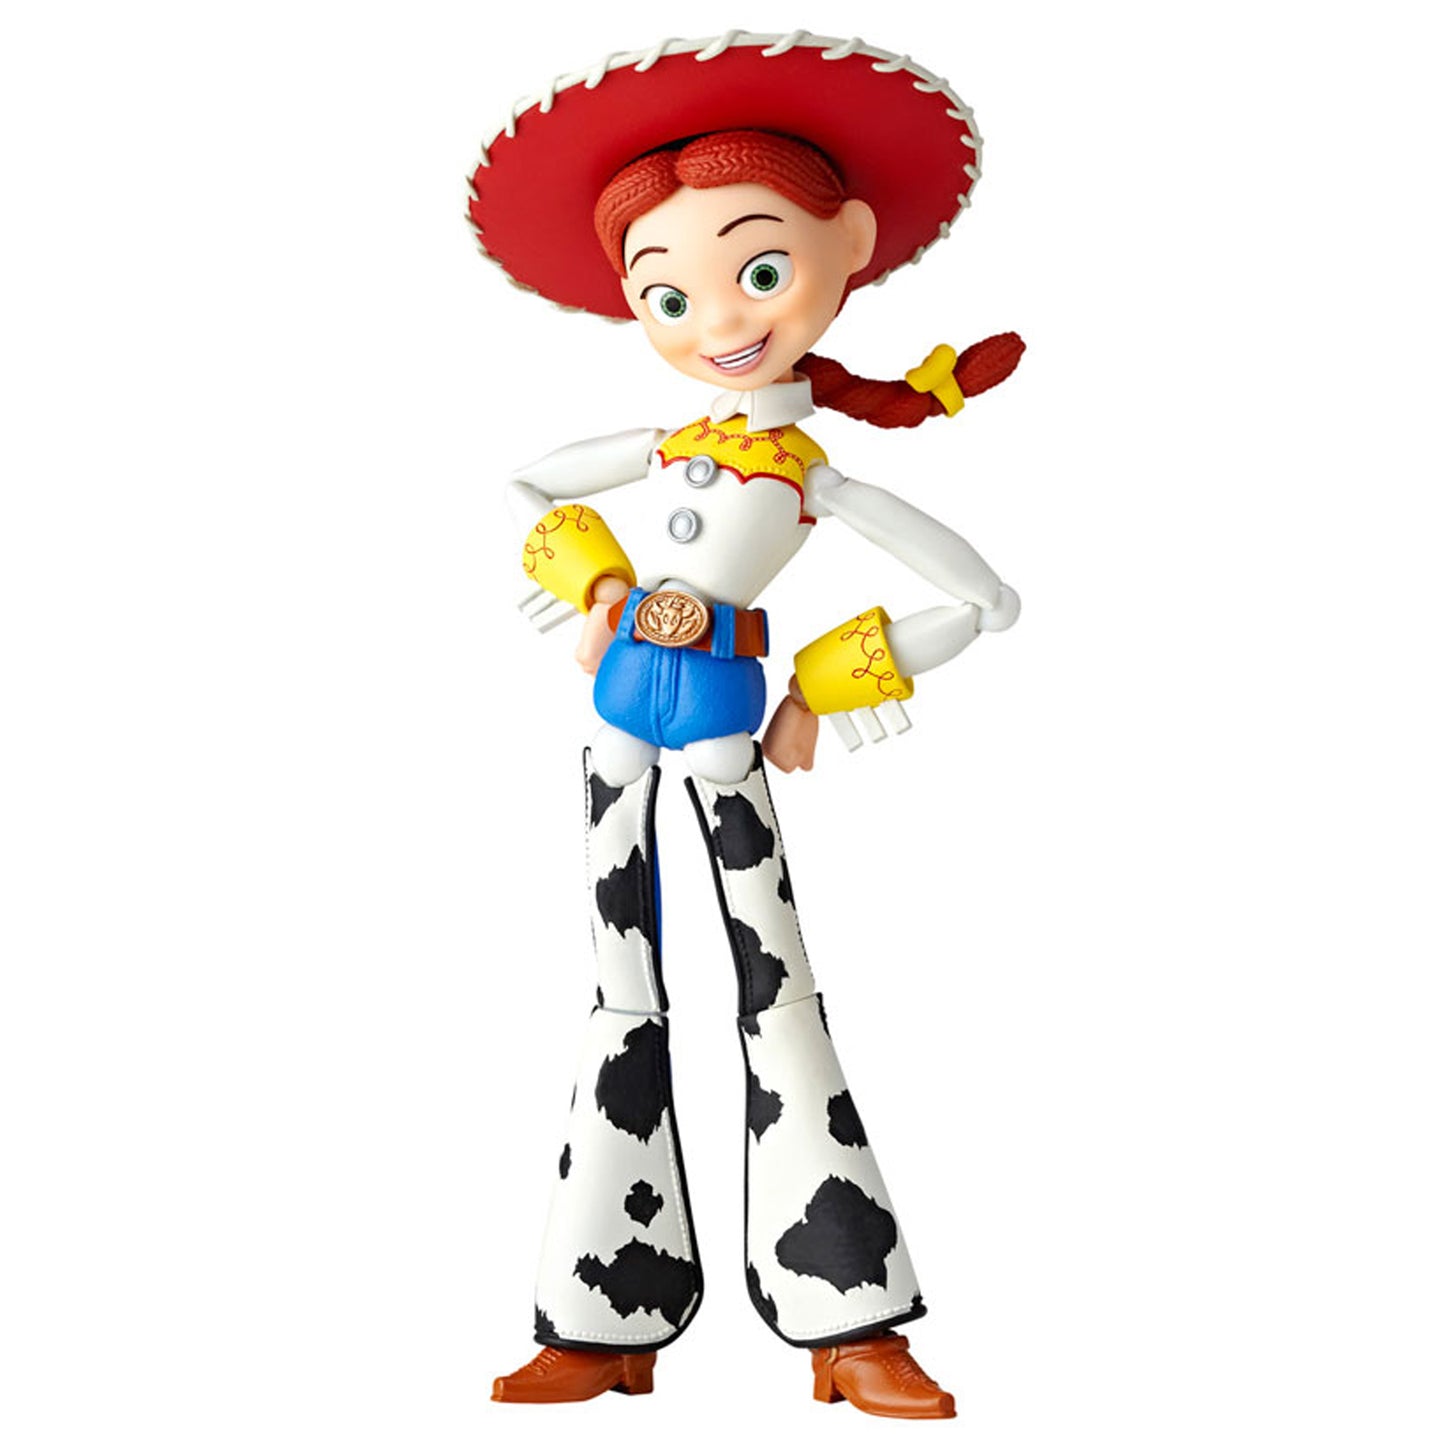 Revoltech: Toy Story 2 - Jessie (Ver.1.5)